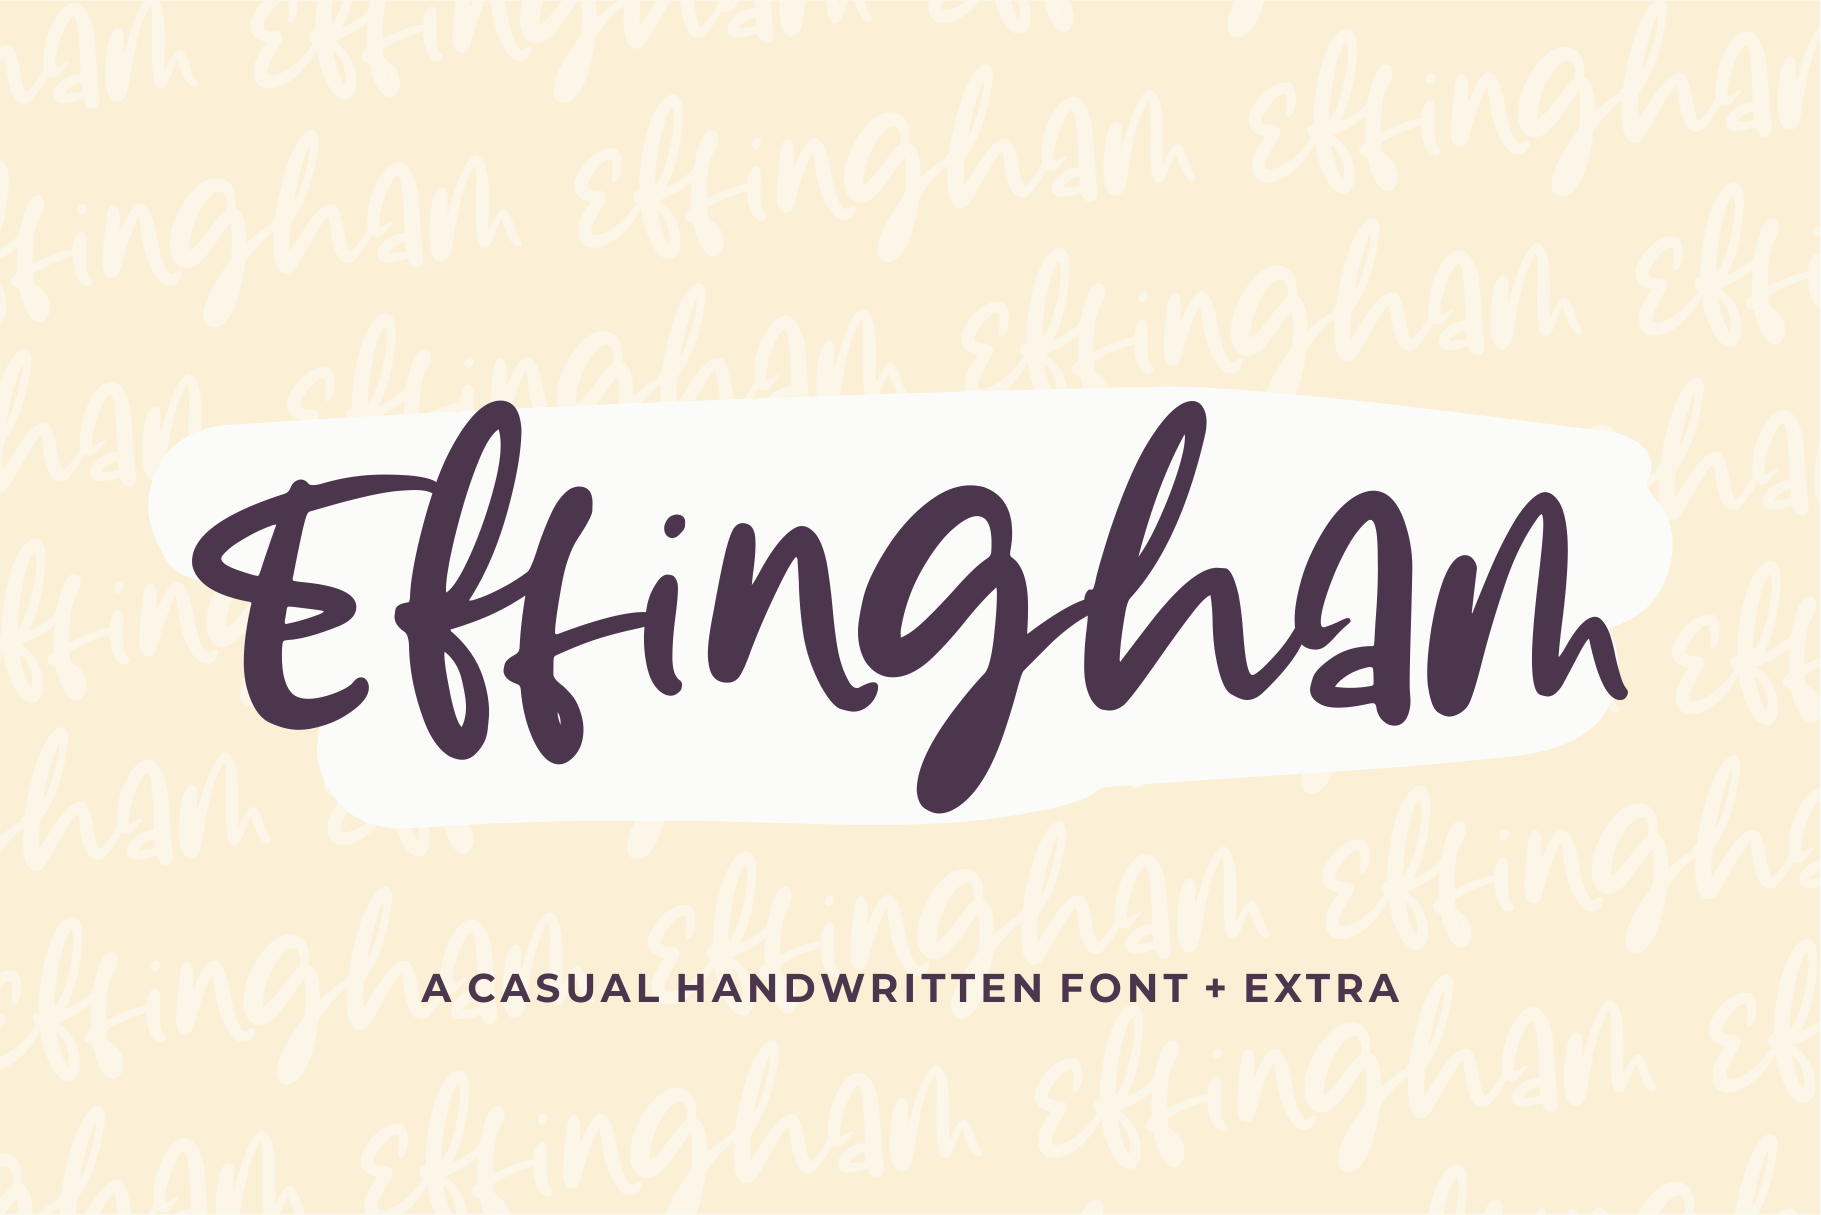 Effingham Extra